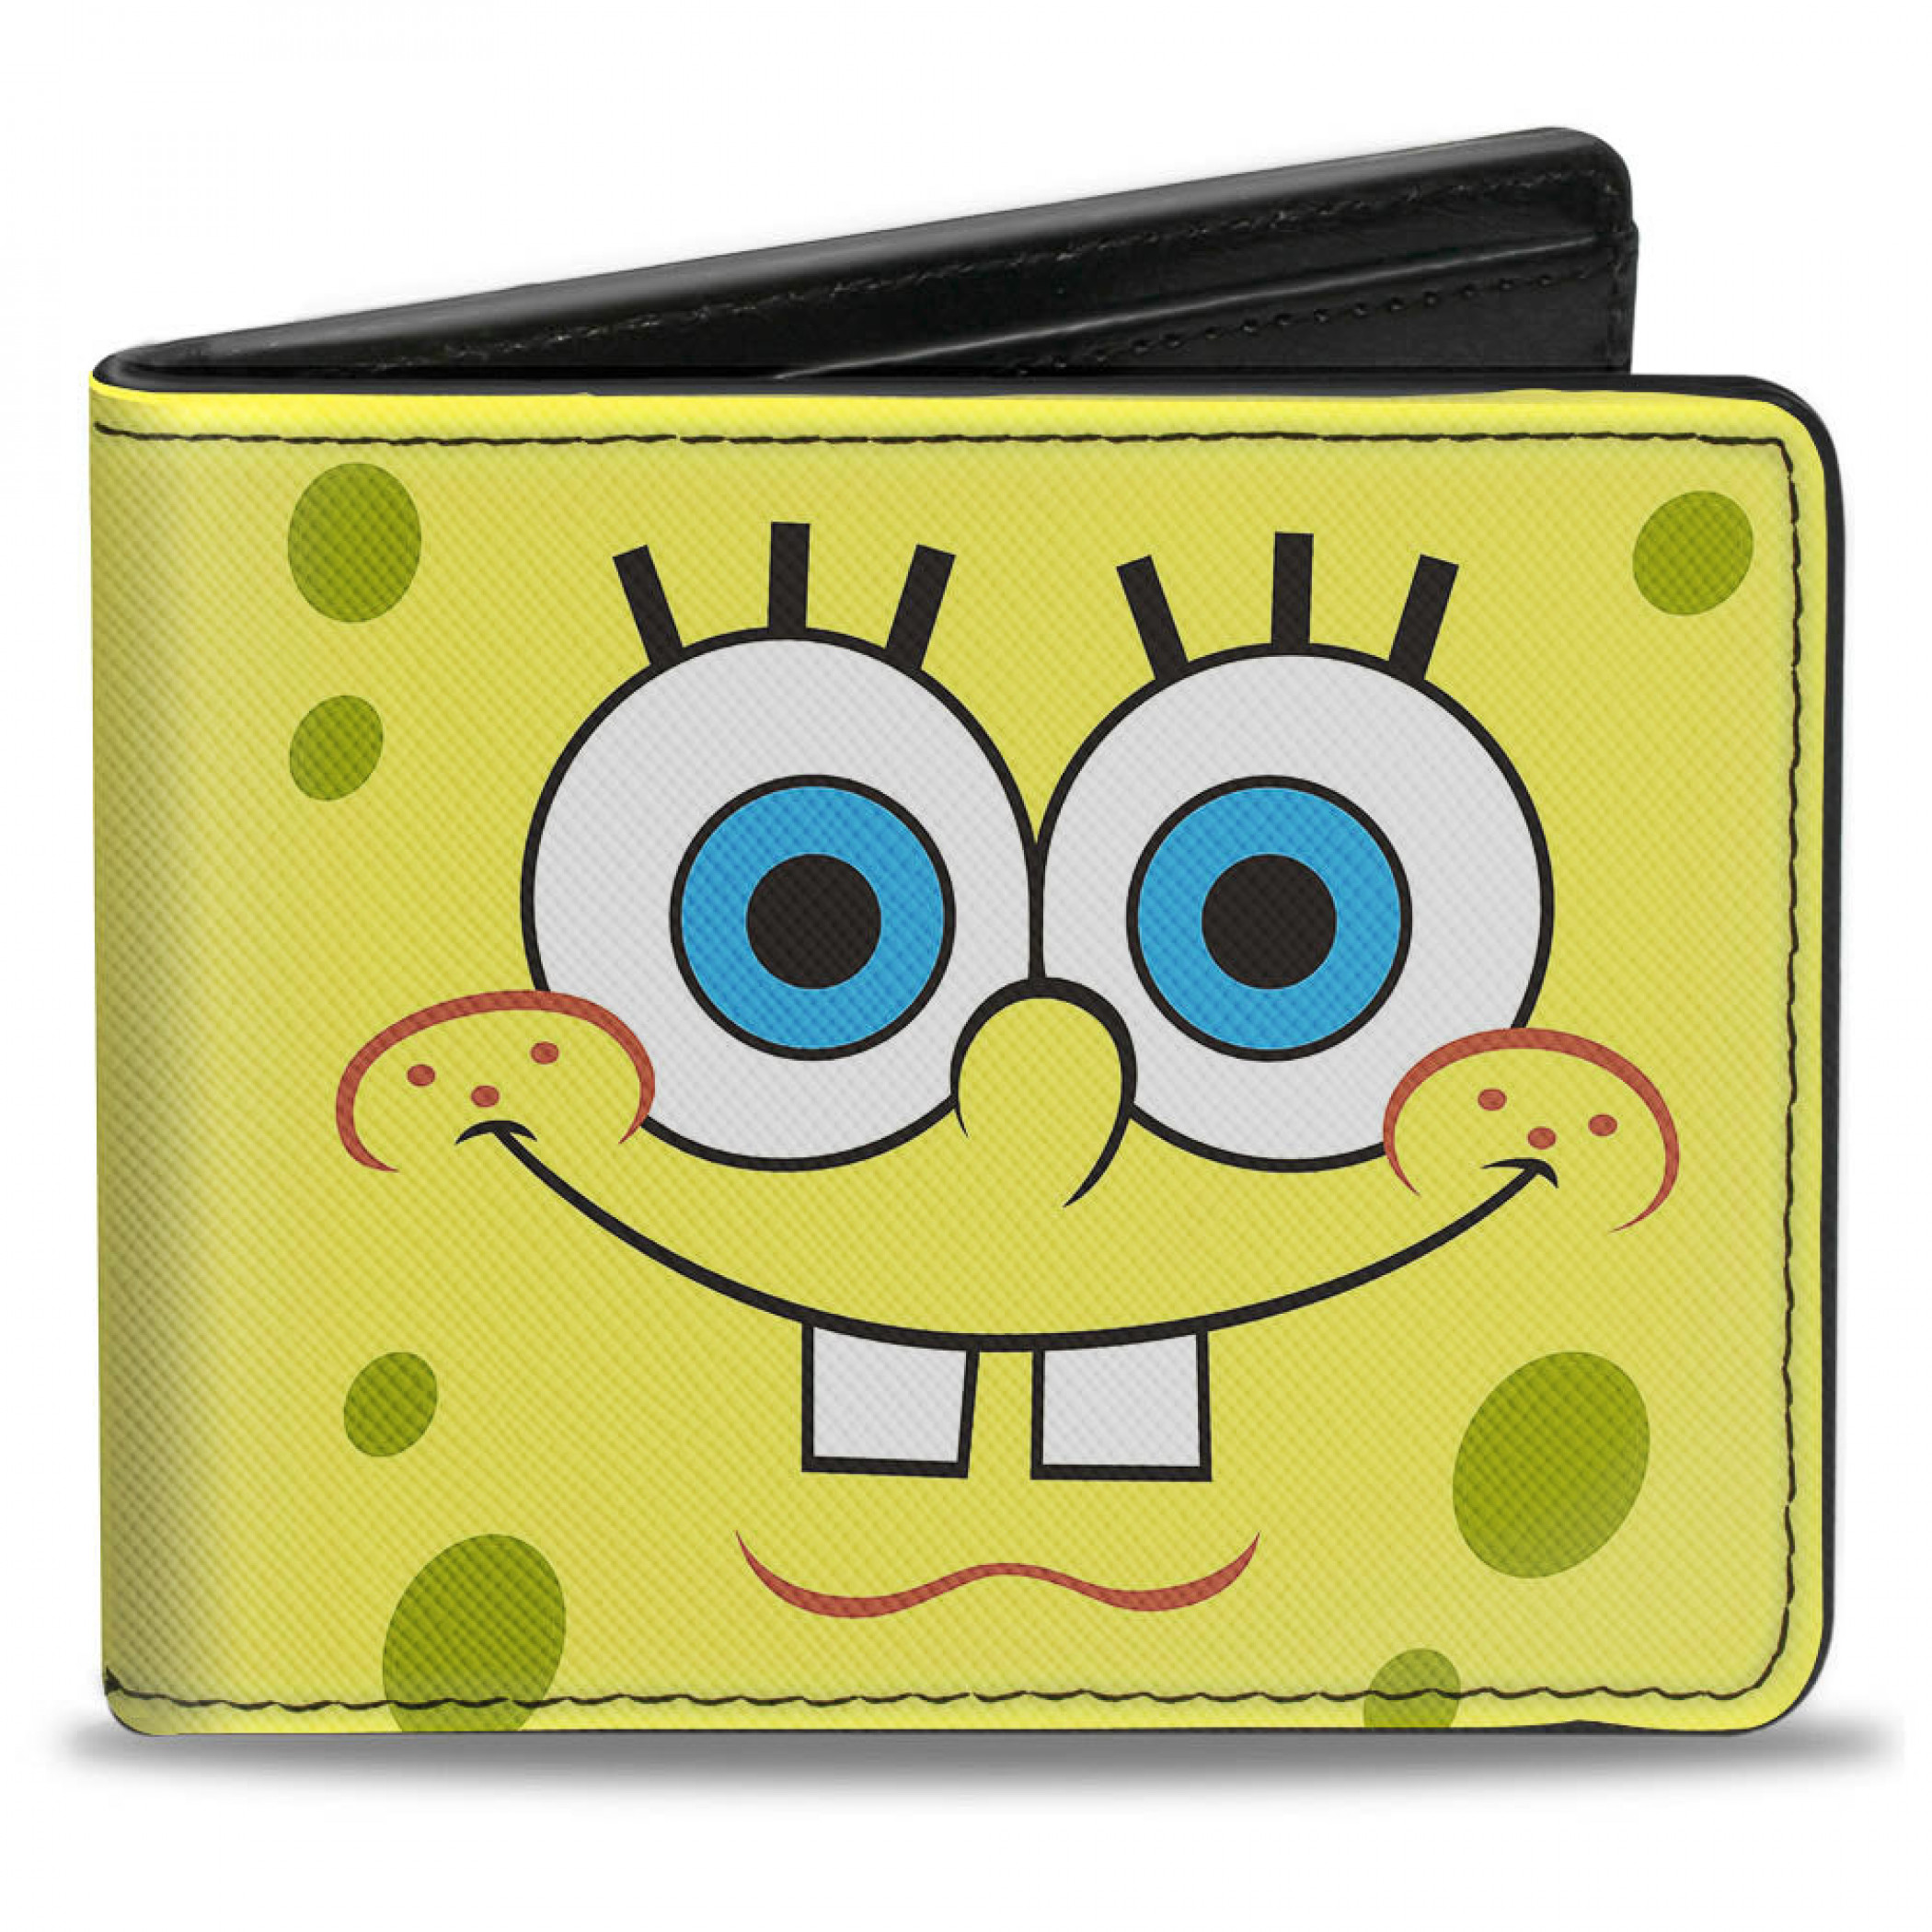 SpongeBob SquarePants Face Wallet